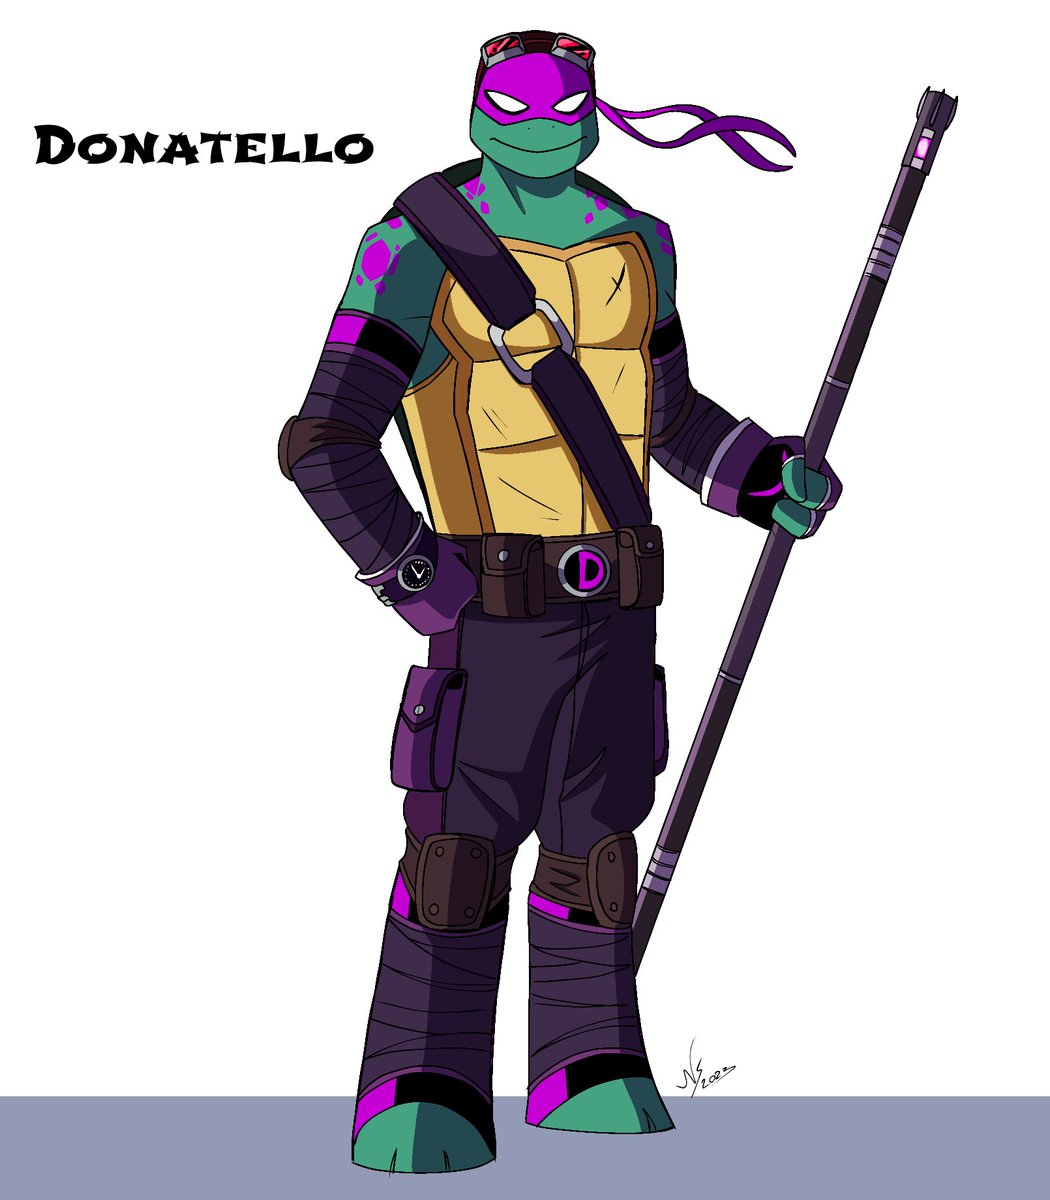 Donatello.
#TMNT #TMNTMovie #TMNTMutantMayhem #tmntdonnie #artist